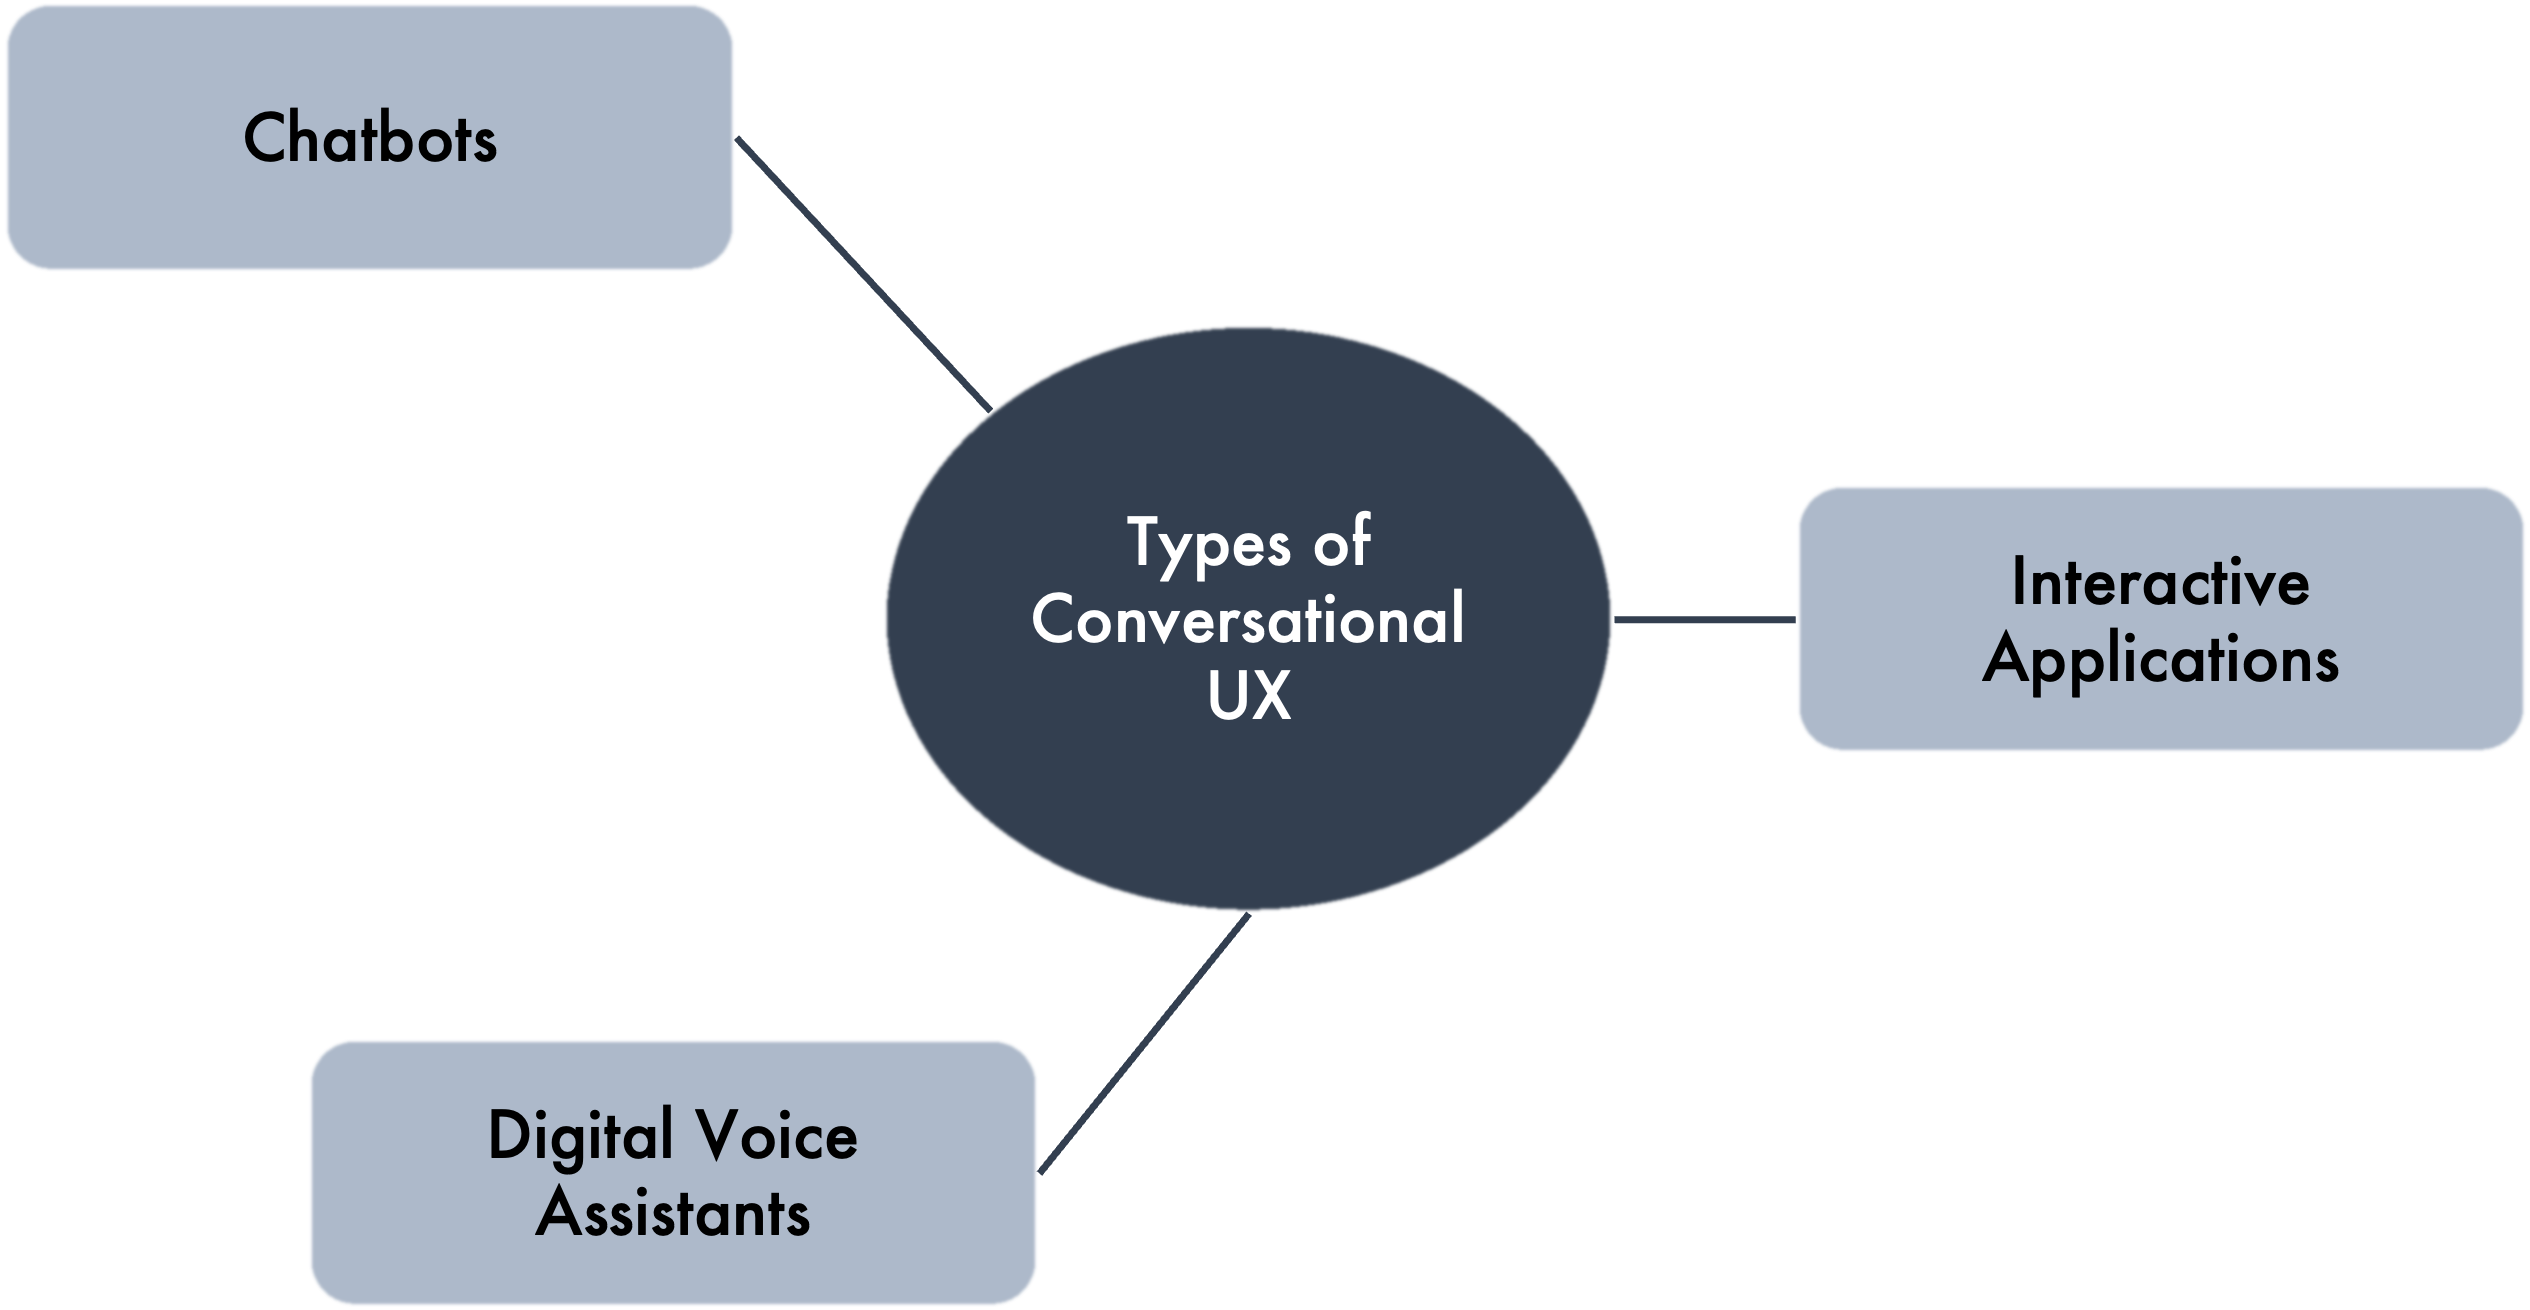 Major Types of Conversational UX